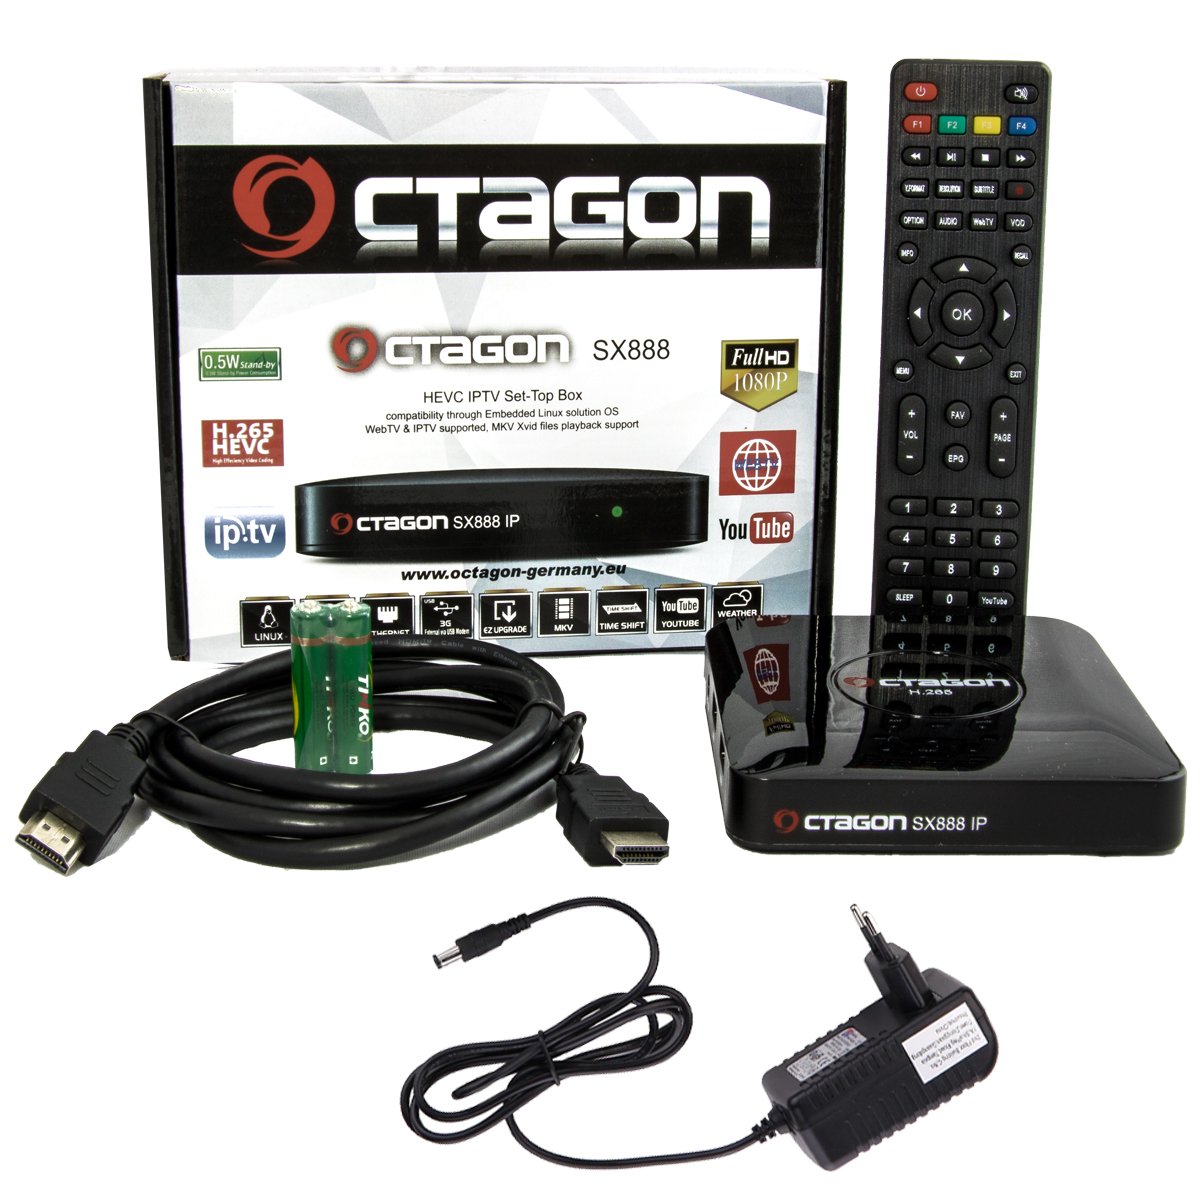 Octagon sx888 IP tv